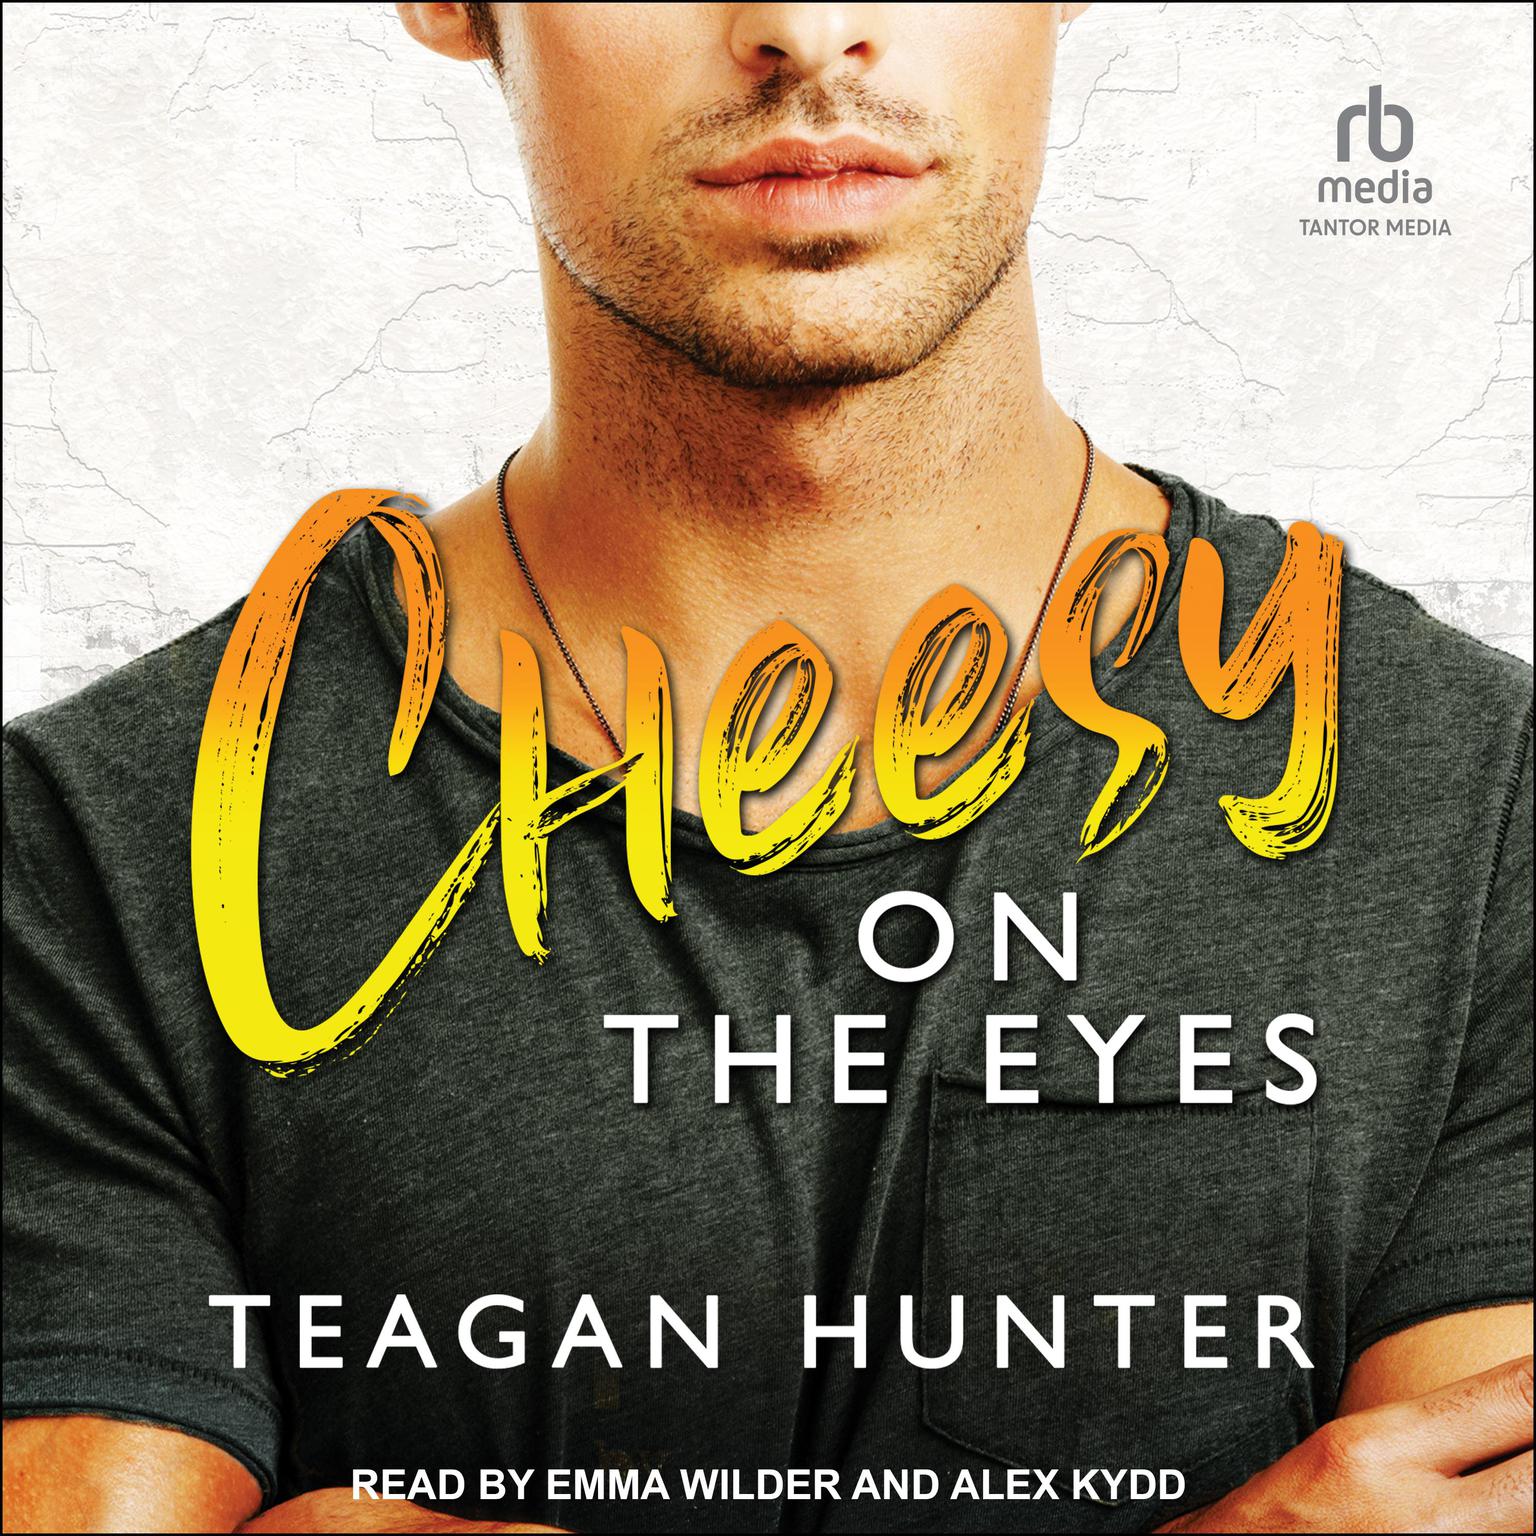 Cheesy on the Eyes: Fake Daring Romcom Audiobook, by Teagan Hunter